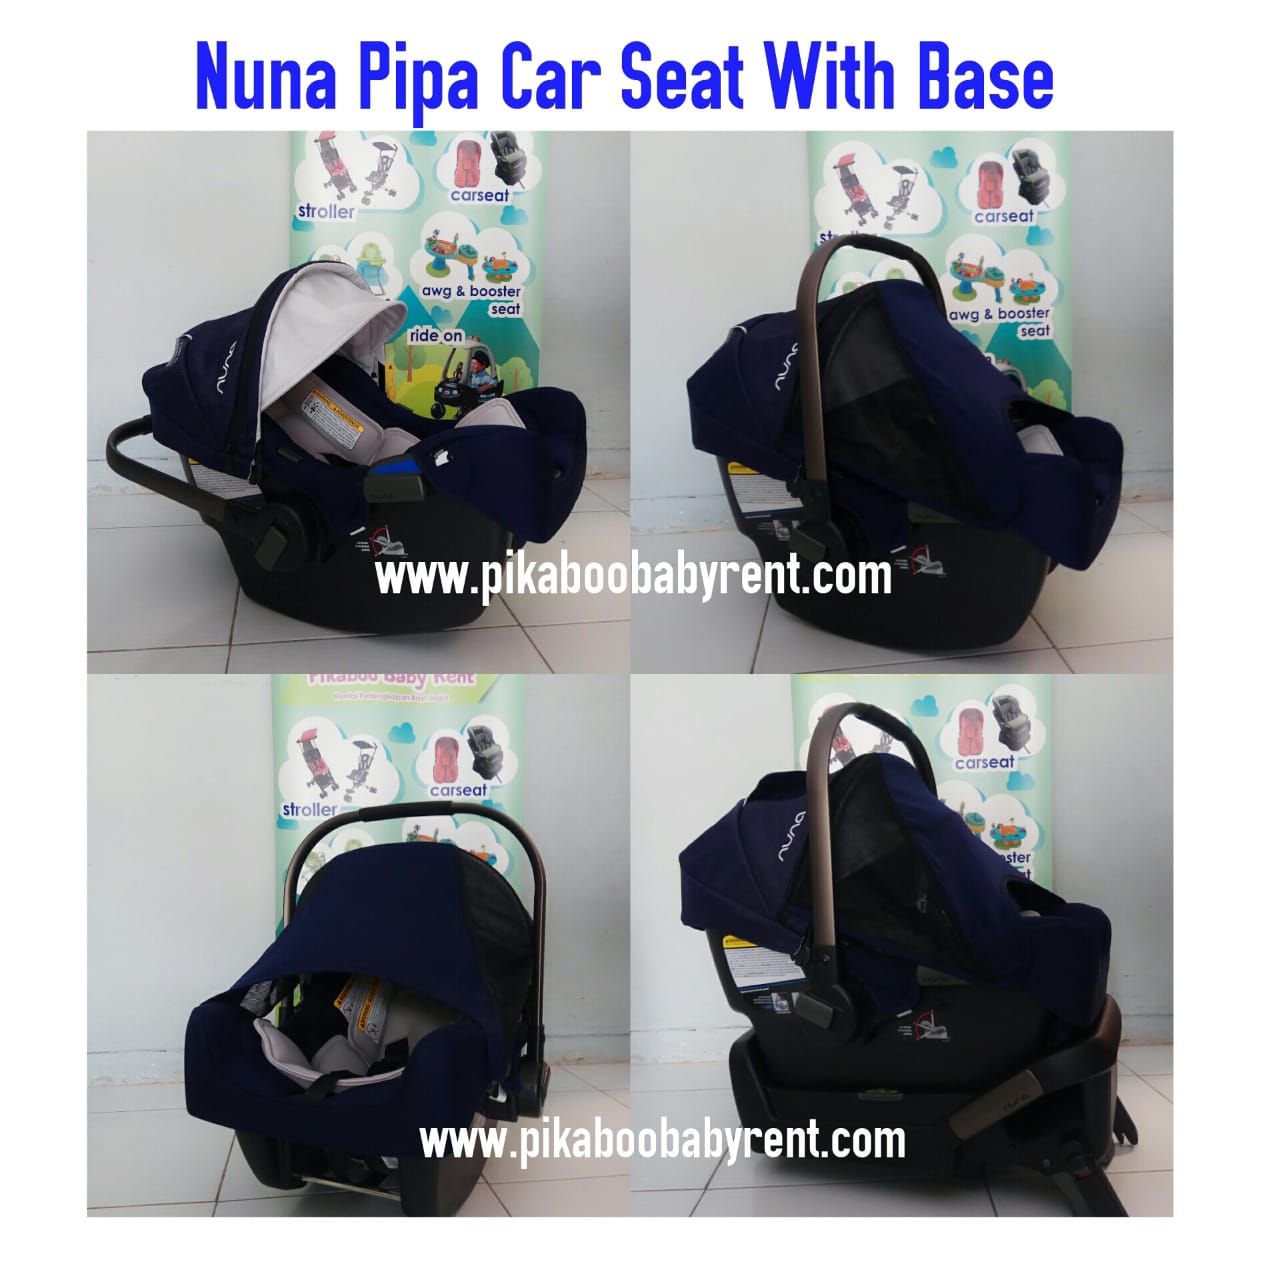 NUNA PIPA CAR SEAT WITH BASE